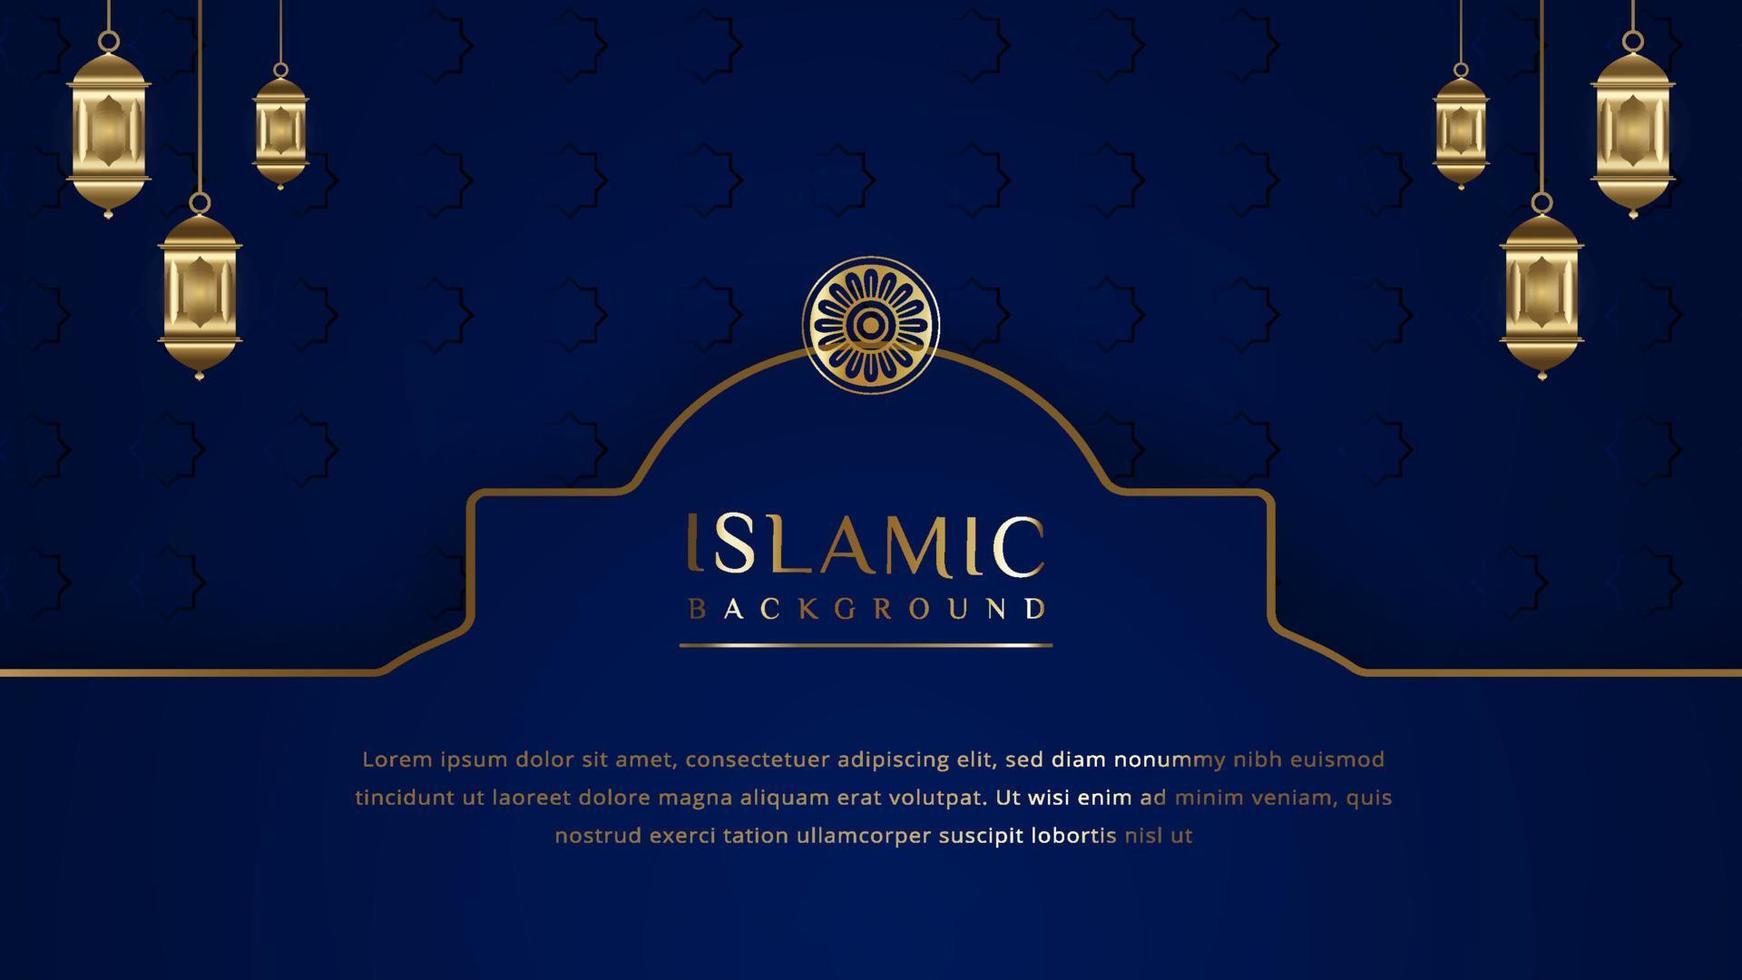 Islamic arabic elegant luxury ornamental background with islamic pattern and decorative lanterns vector